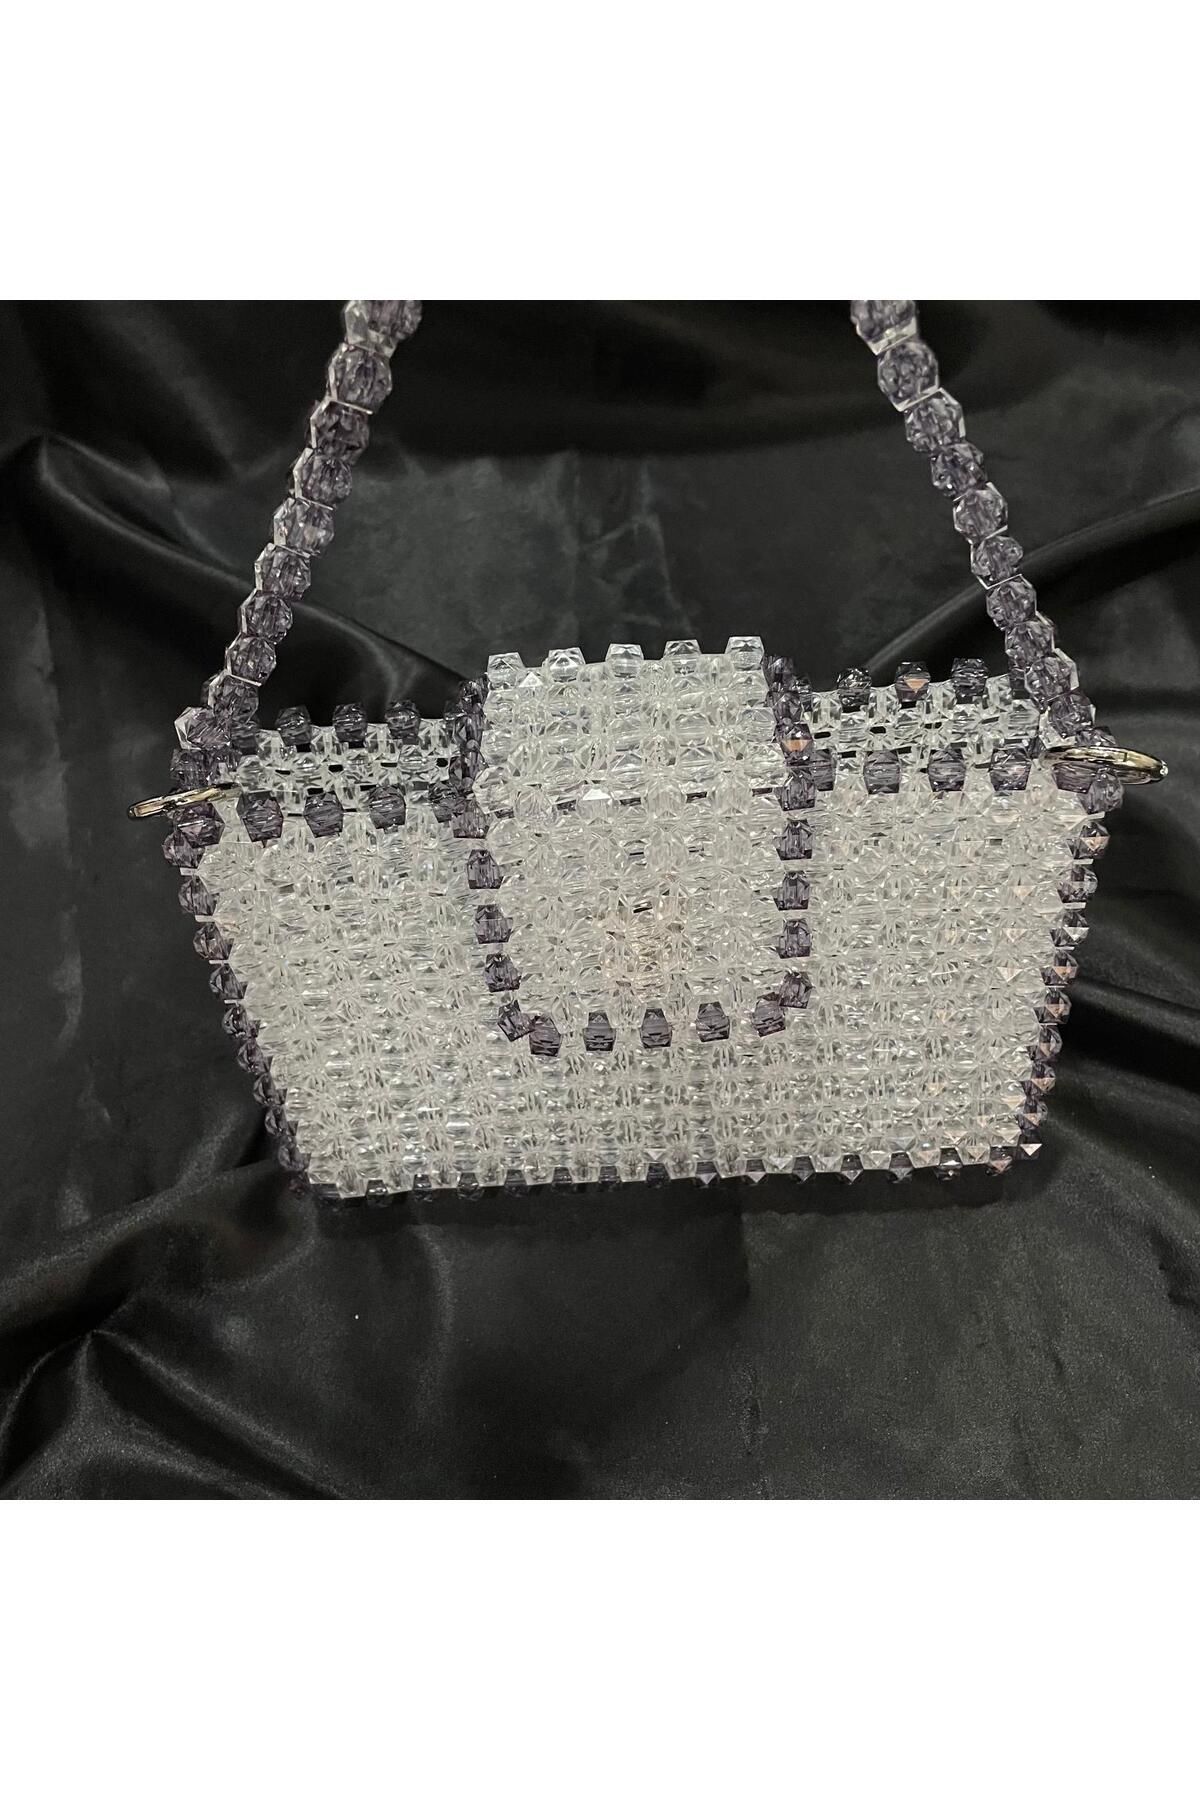 sirius art design kristal kutu çanta - boncuk çanta